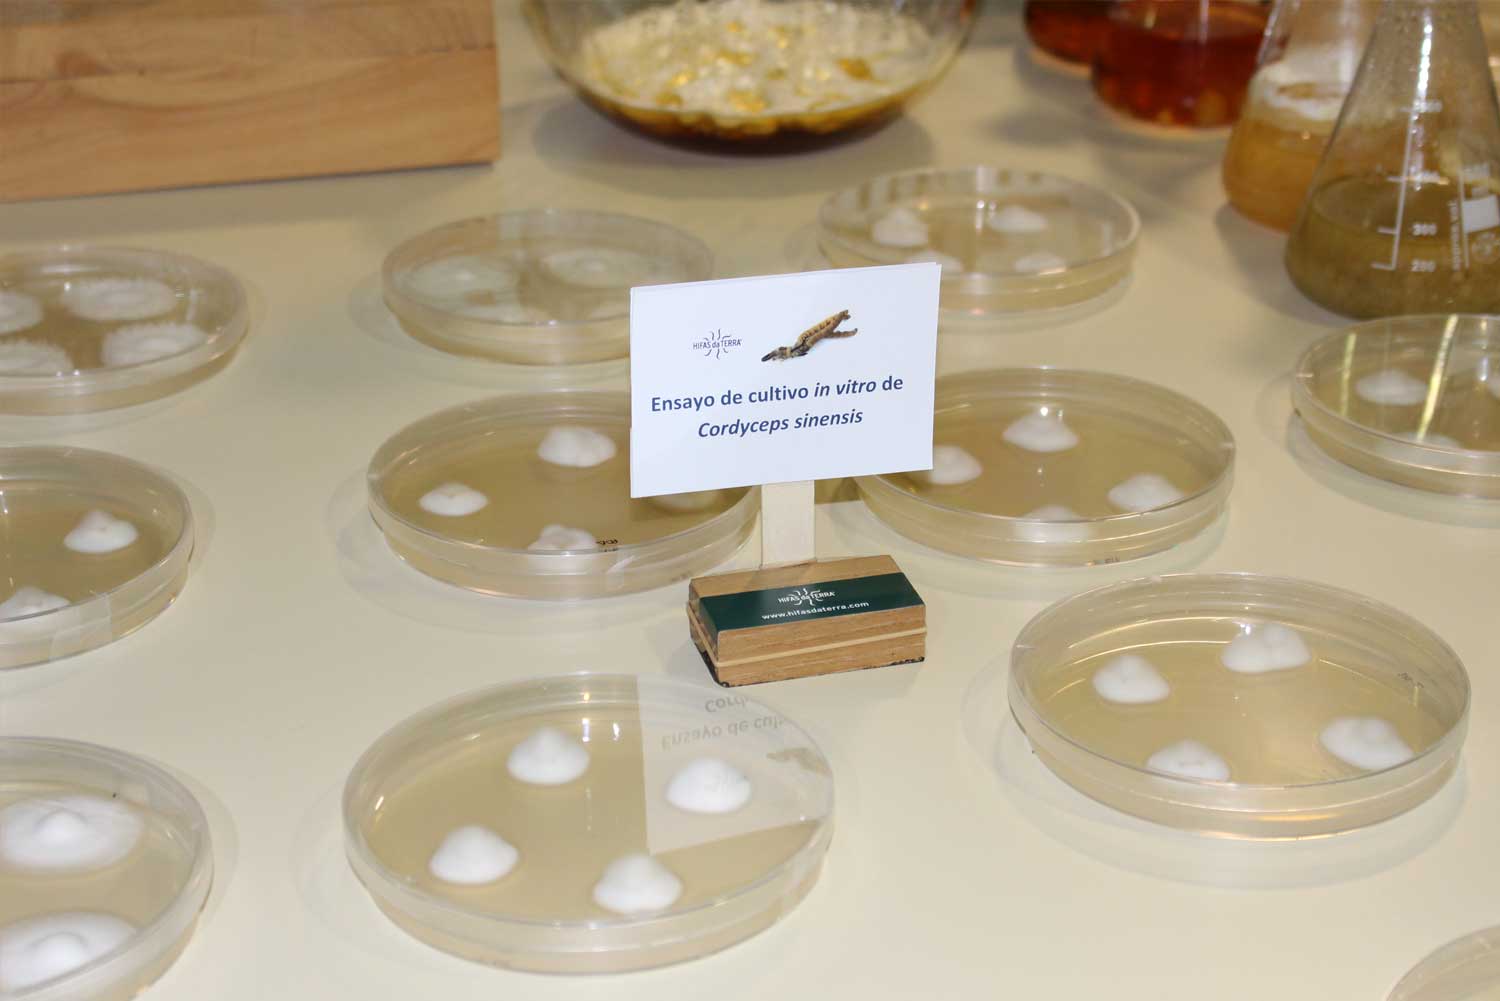 mycelium cordyceps sinensis culture in vitro